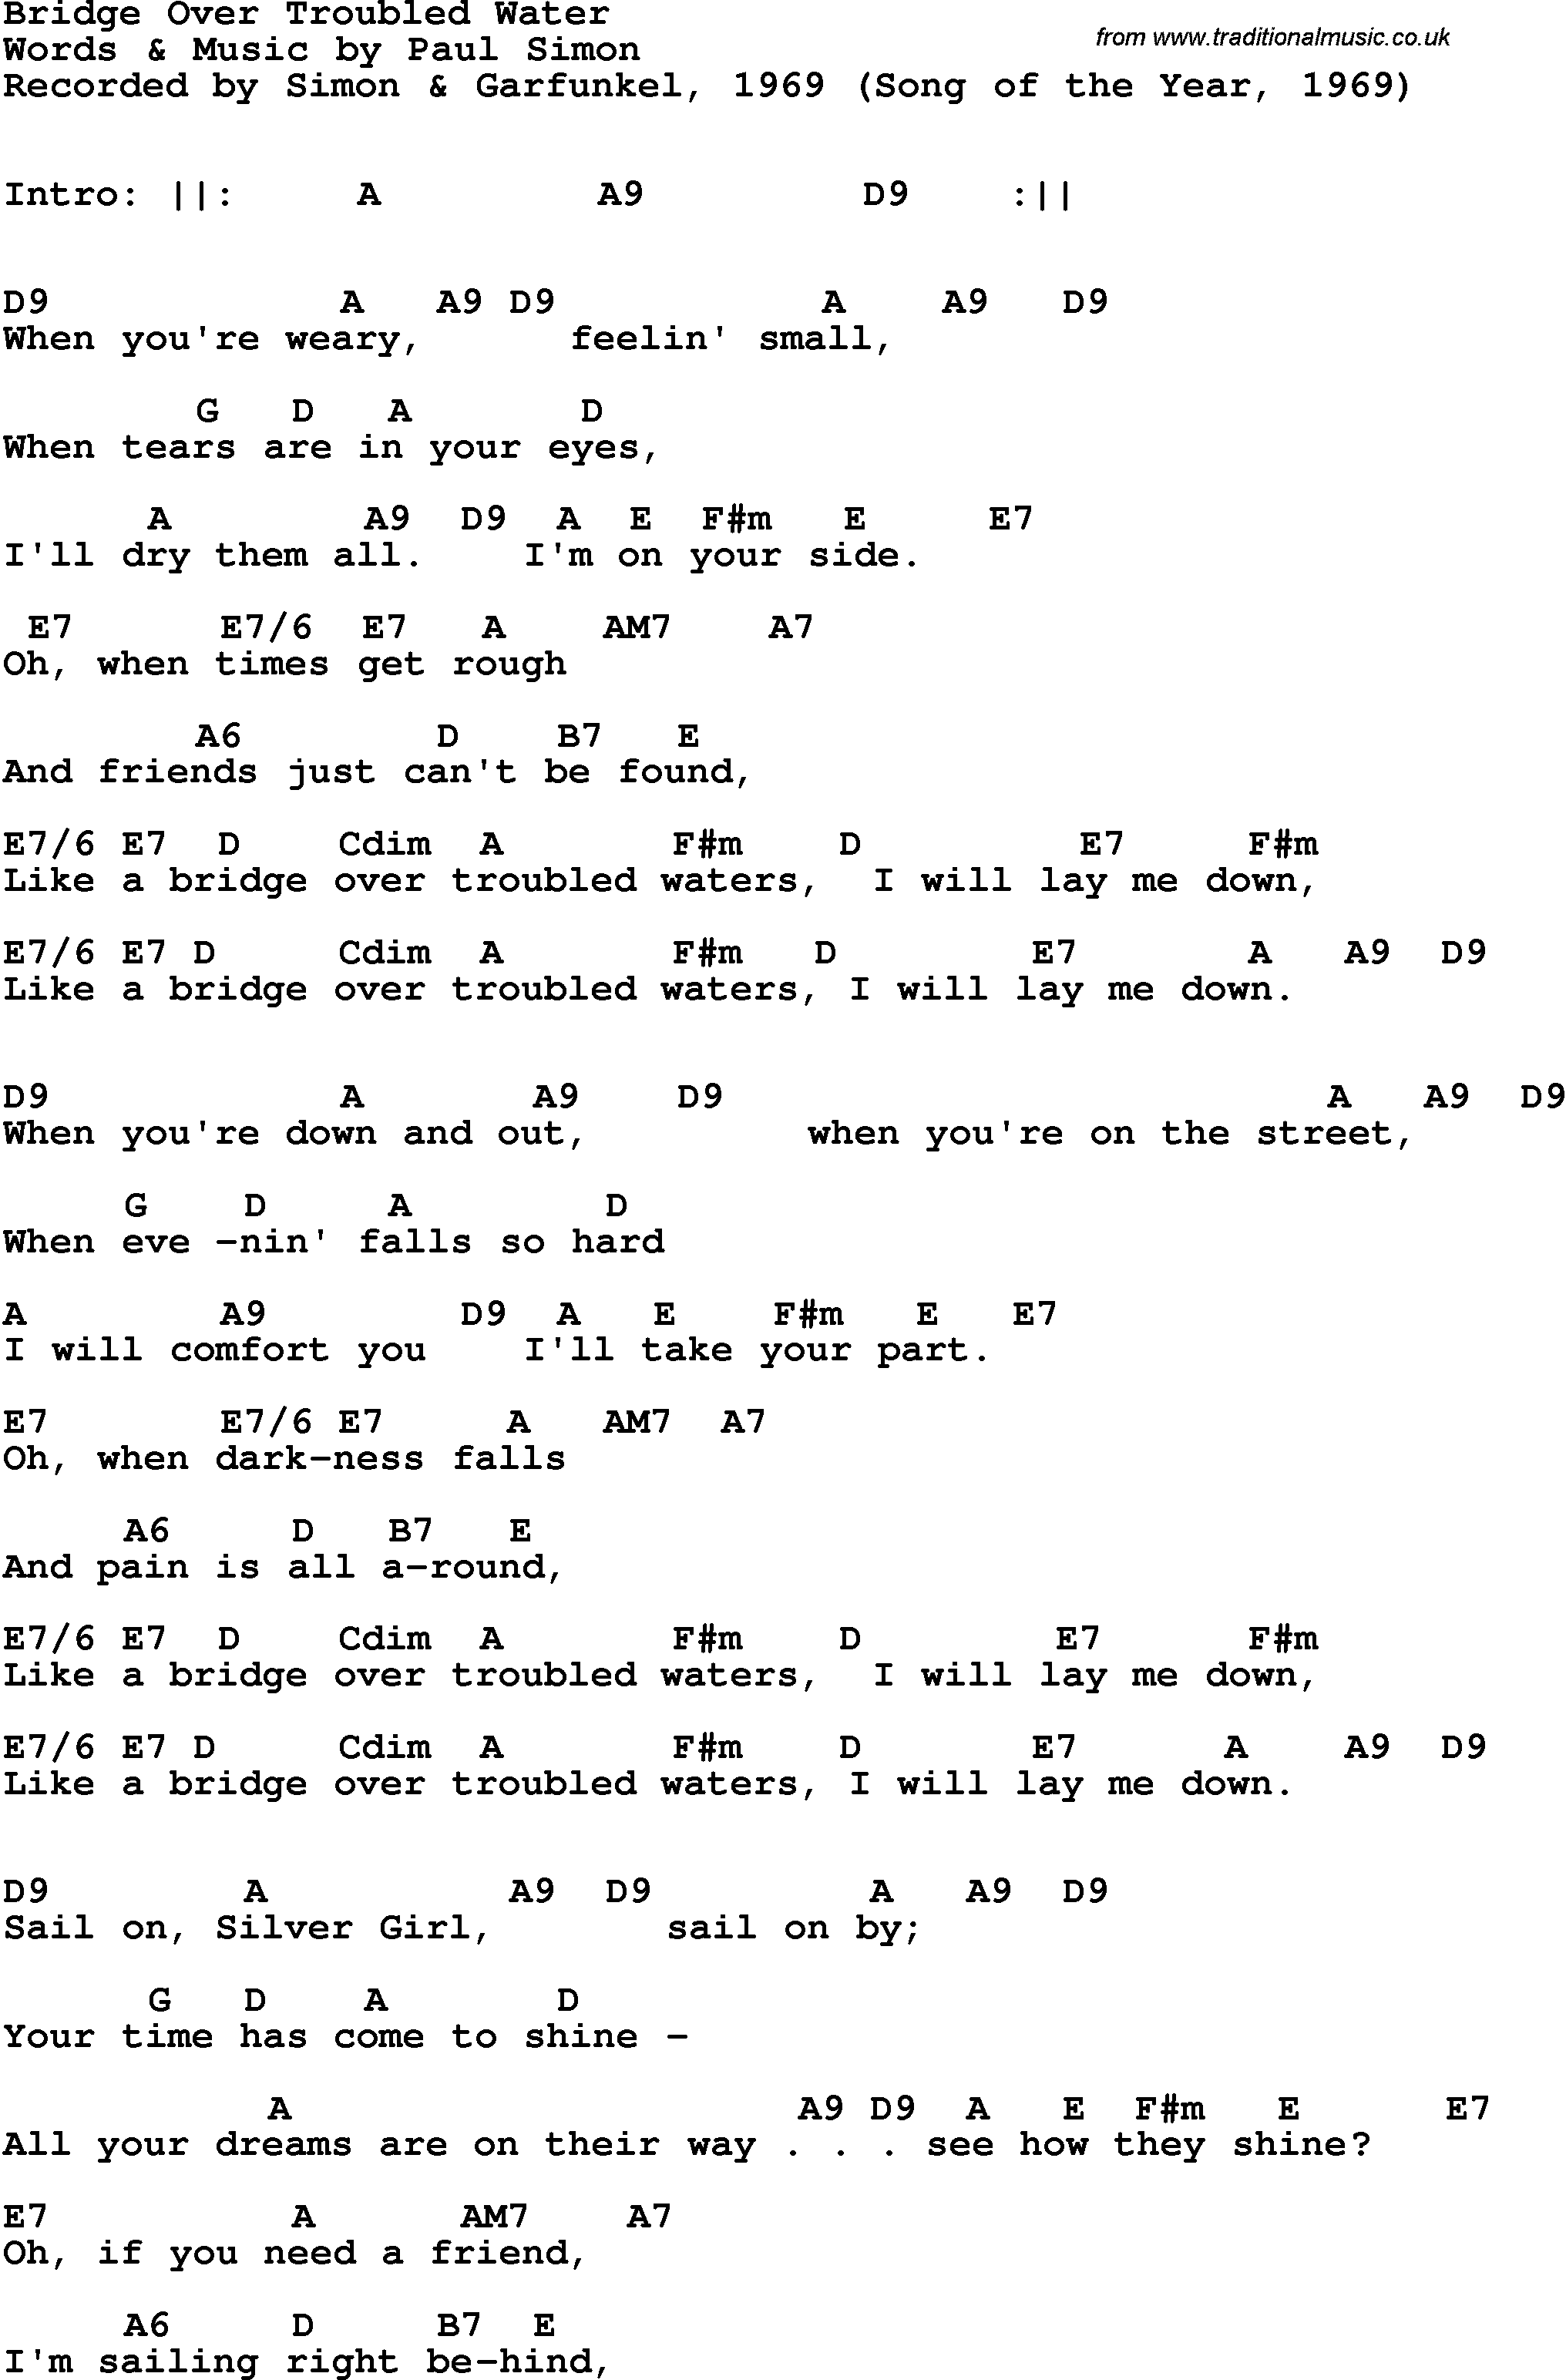 Song Lyrics with guitar chords for Bridge Over Troubled Water - Simon & Garfunkel, 1970